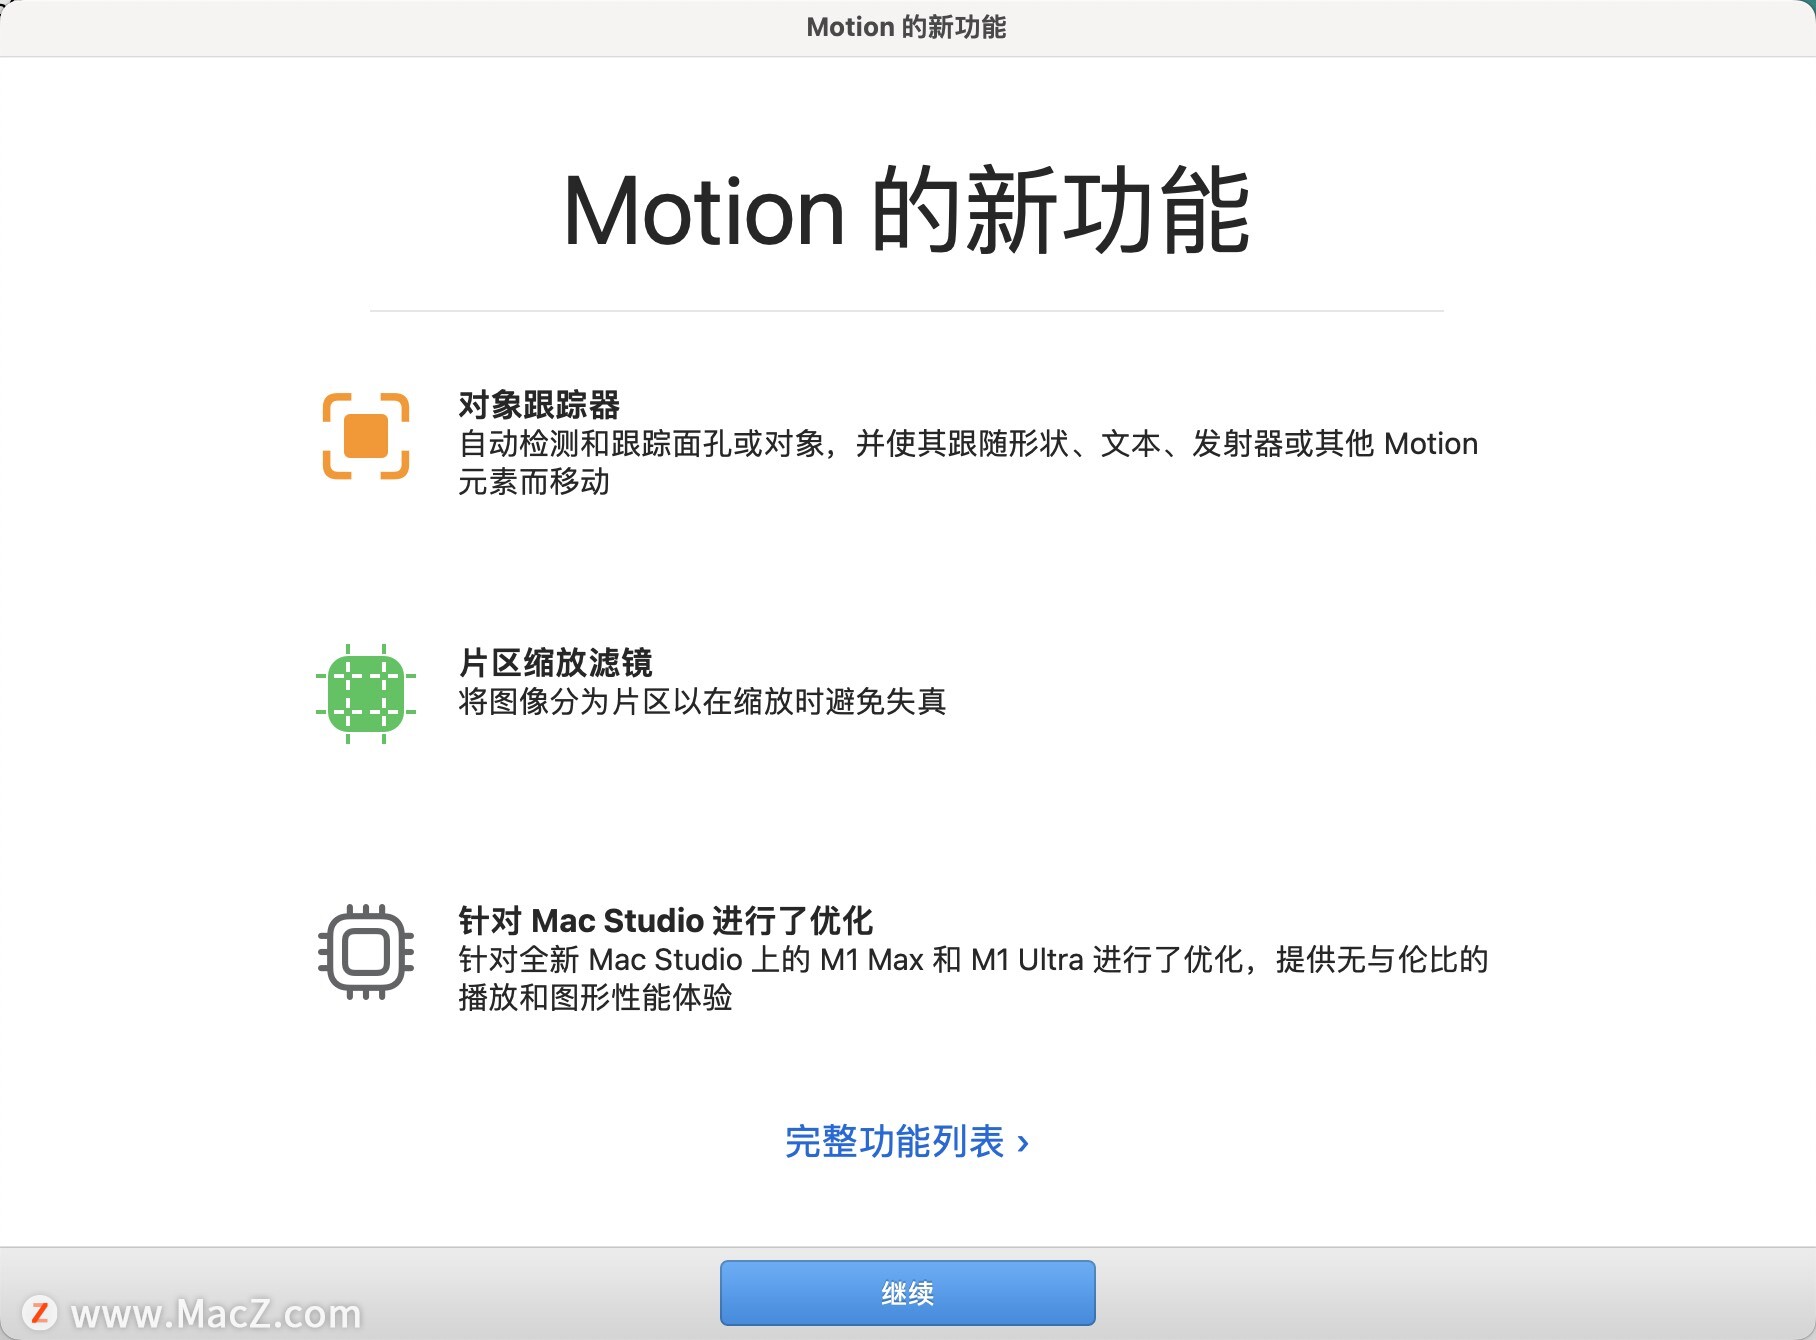 motion5 mac-Motion 5 for Mac(视频后期特效处理软件)- Mac下载插图17